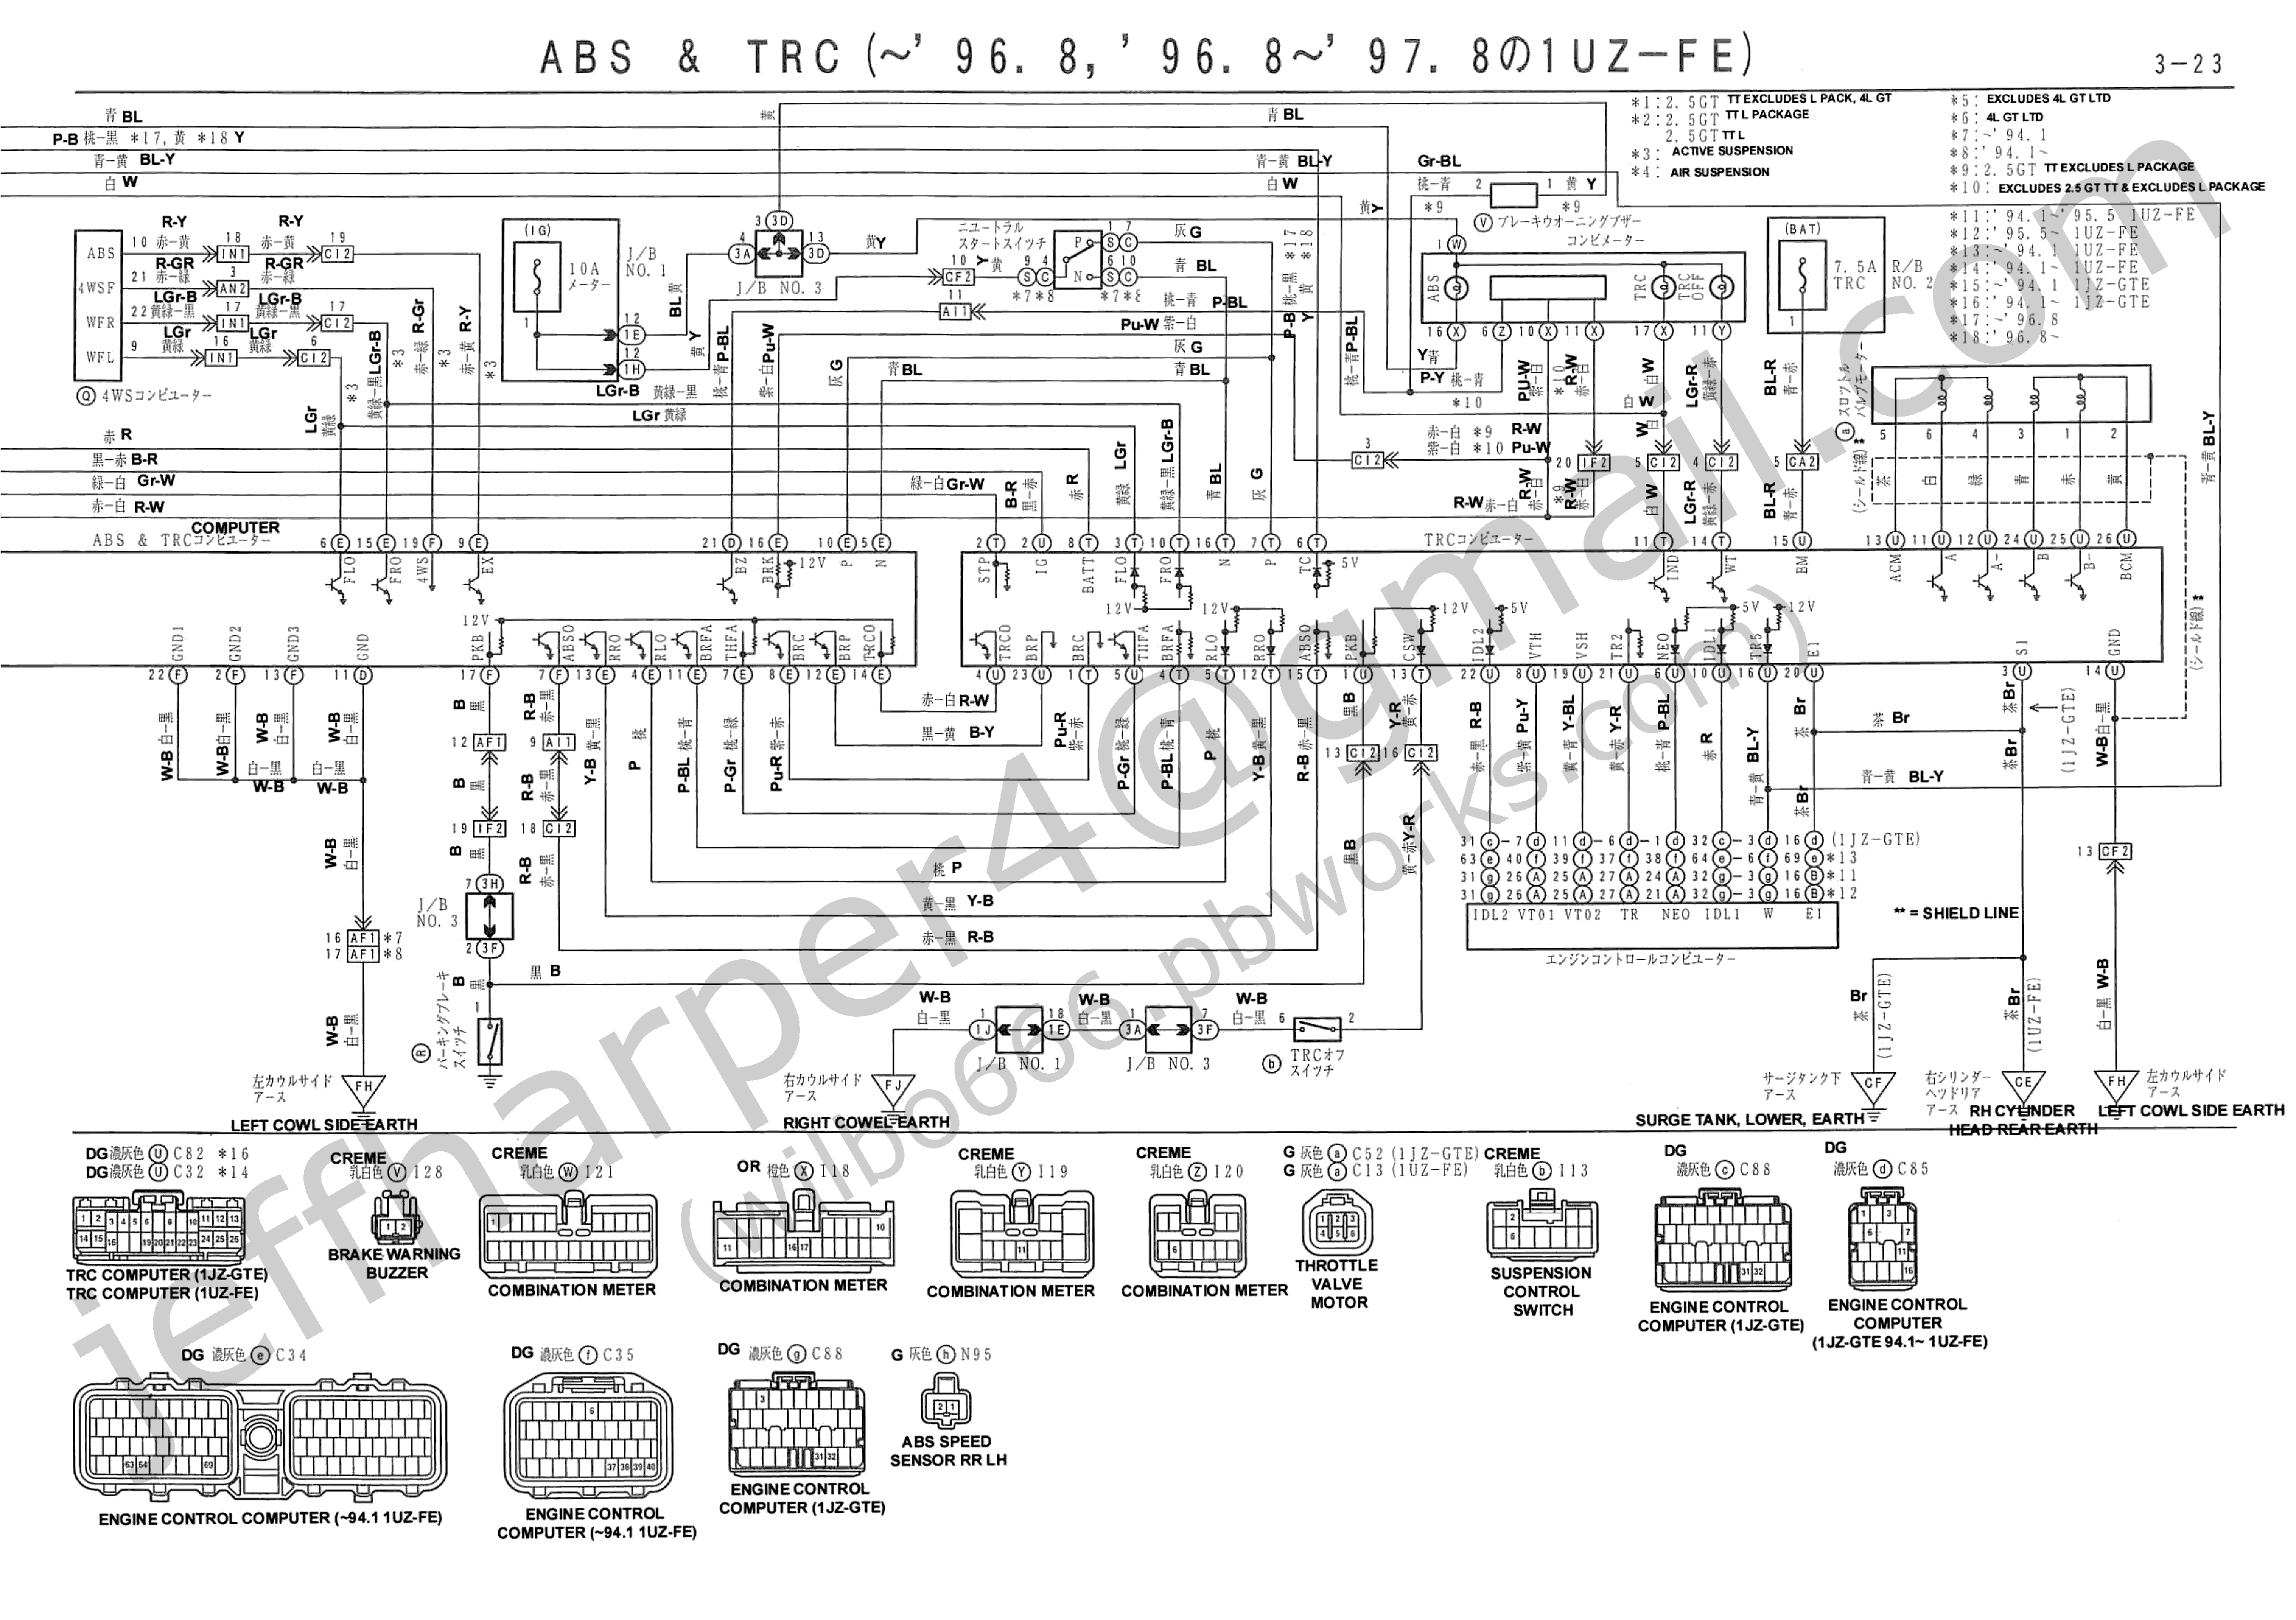 1jz Wiring Diagram Wilbo666 1jz Gte Jzz30 soarer Engine Wiring